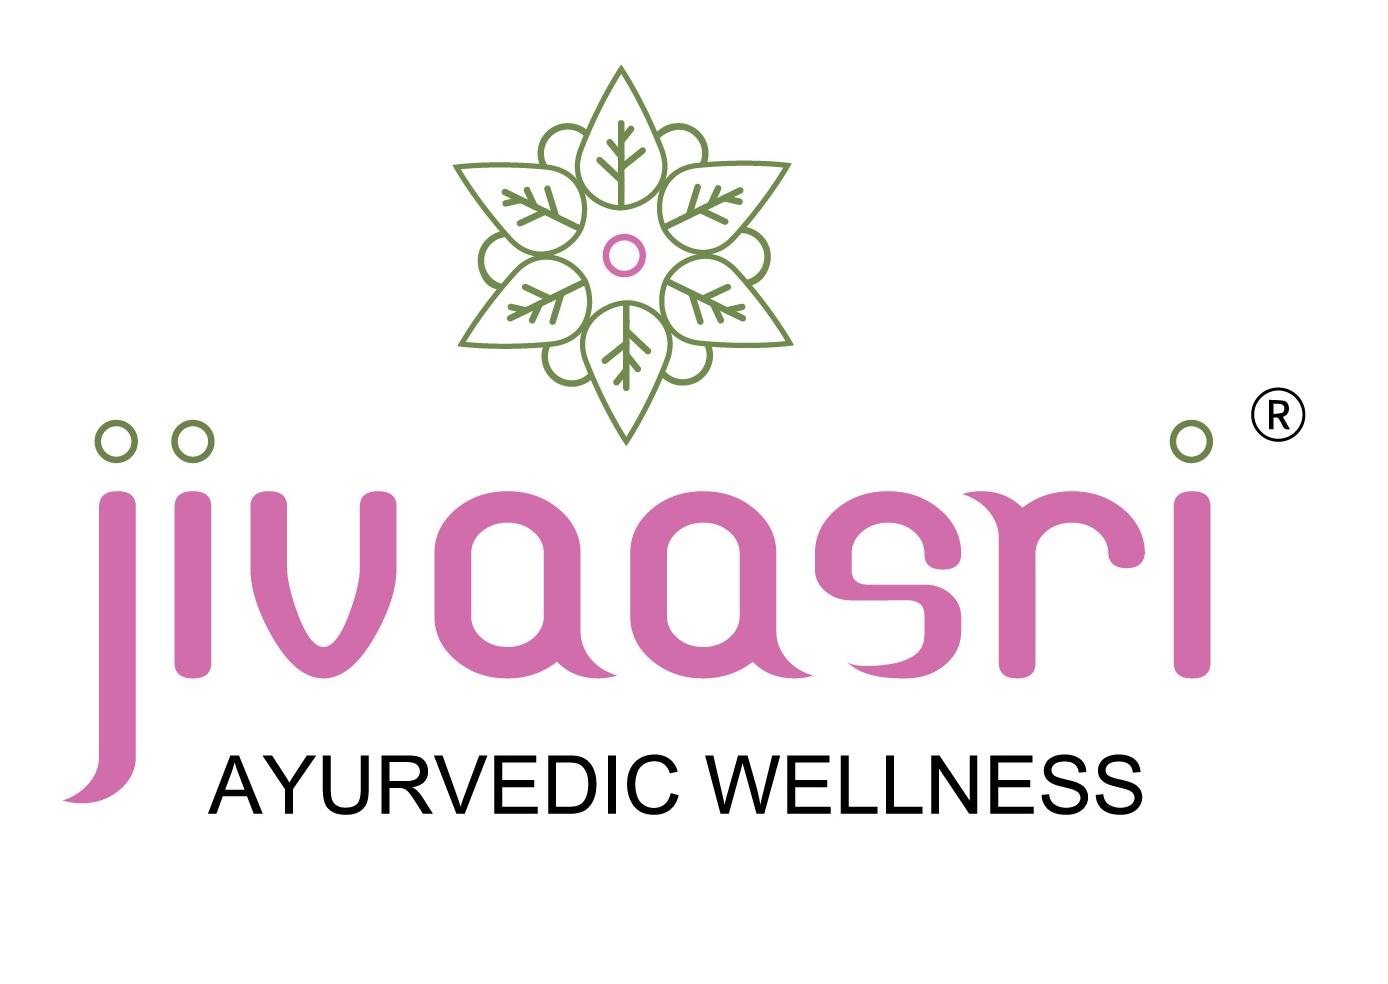 Jivaasri Wellness Center